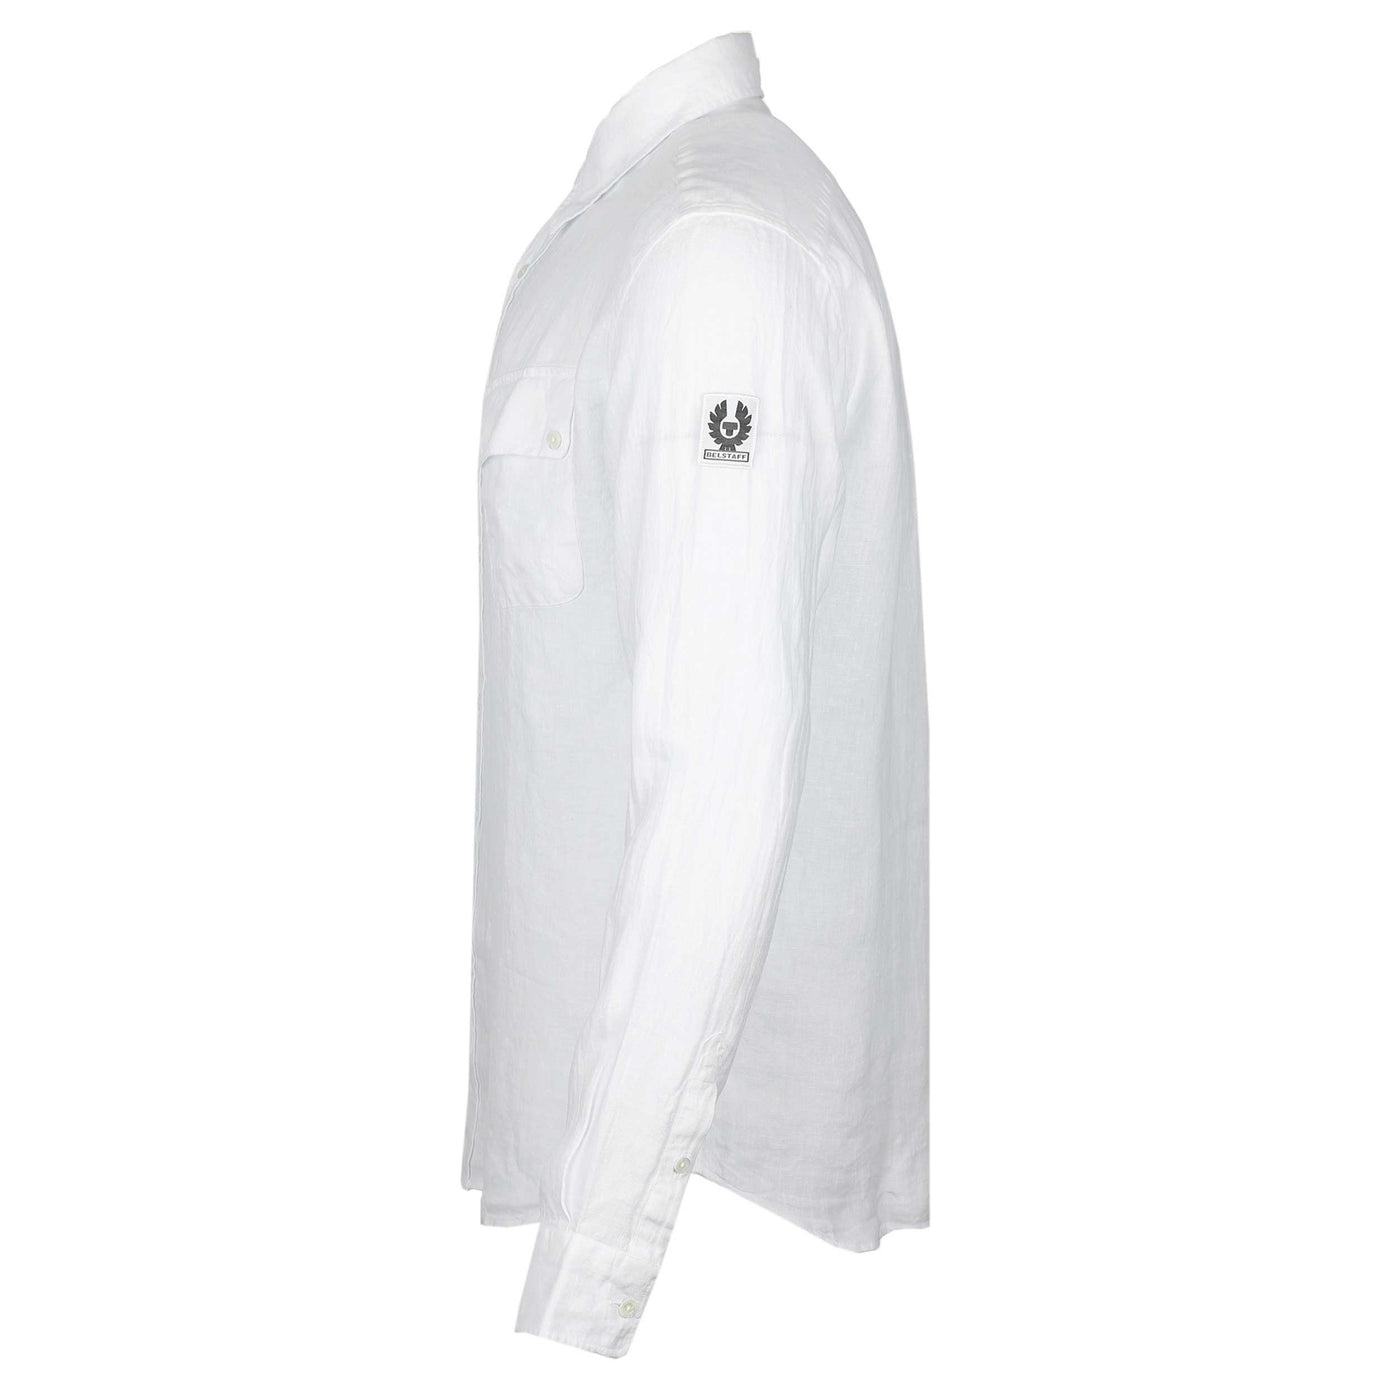 Belstaff Linen Pitch Shirt in White Side